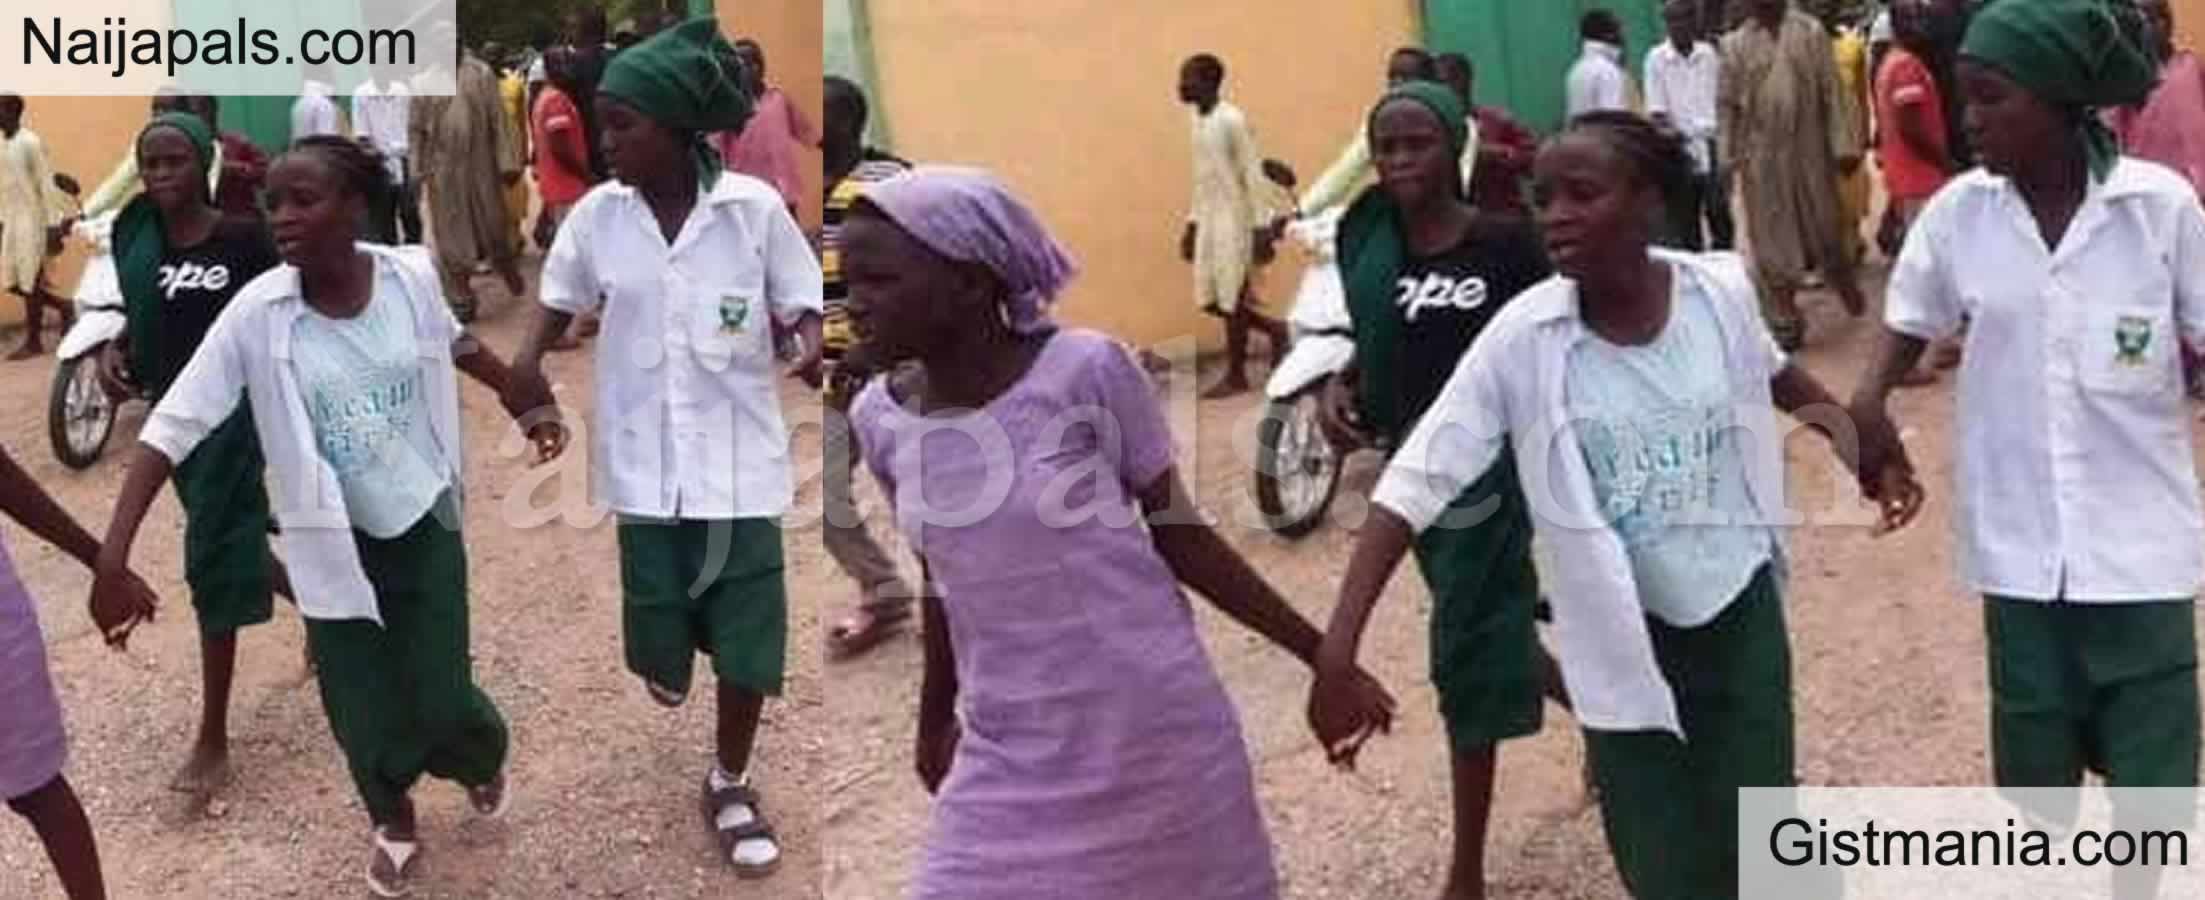 Our Abductors Were Not Nigerians - Escaped Kebbi School Student ...